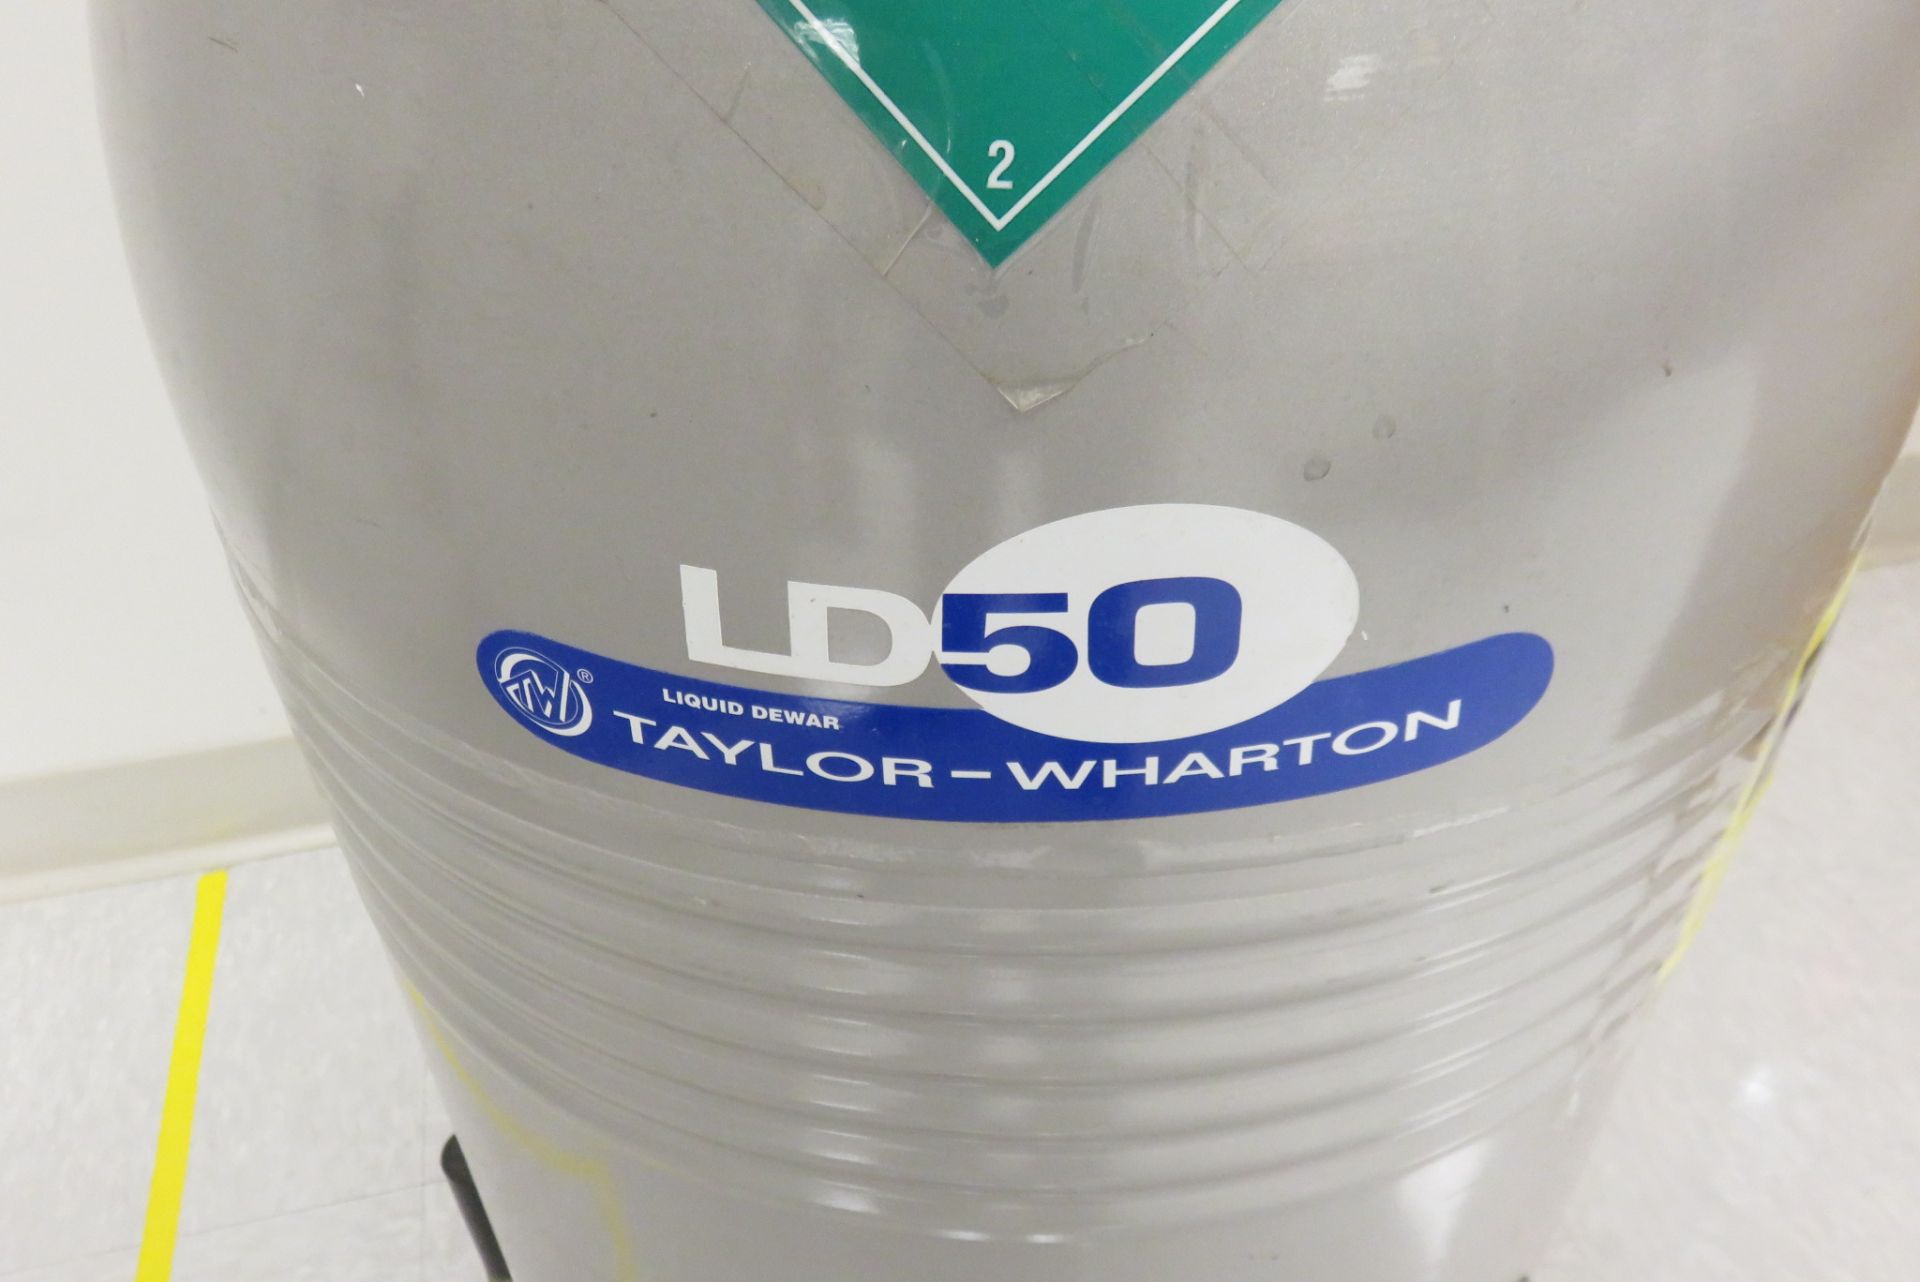 Taylor-Wharton Liquid Nitrogen Dewar with mobile stand - Image 3 of 3